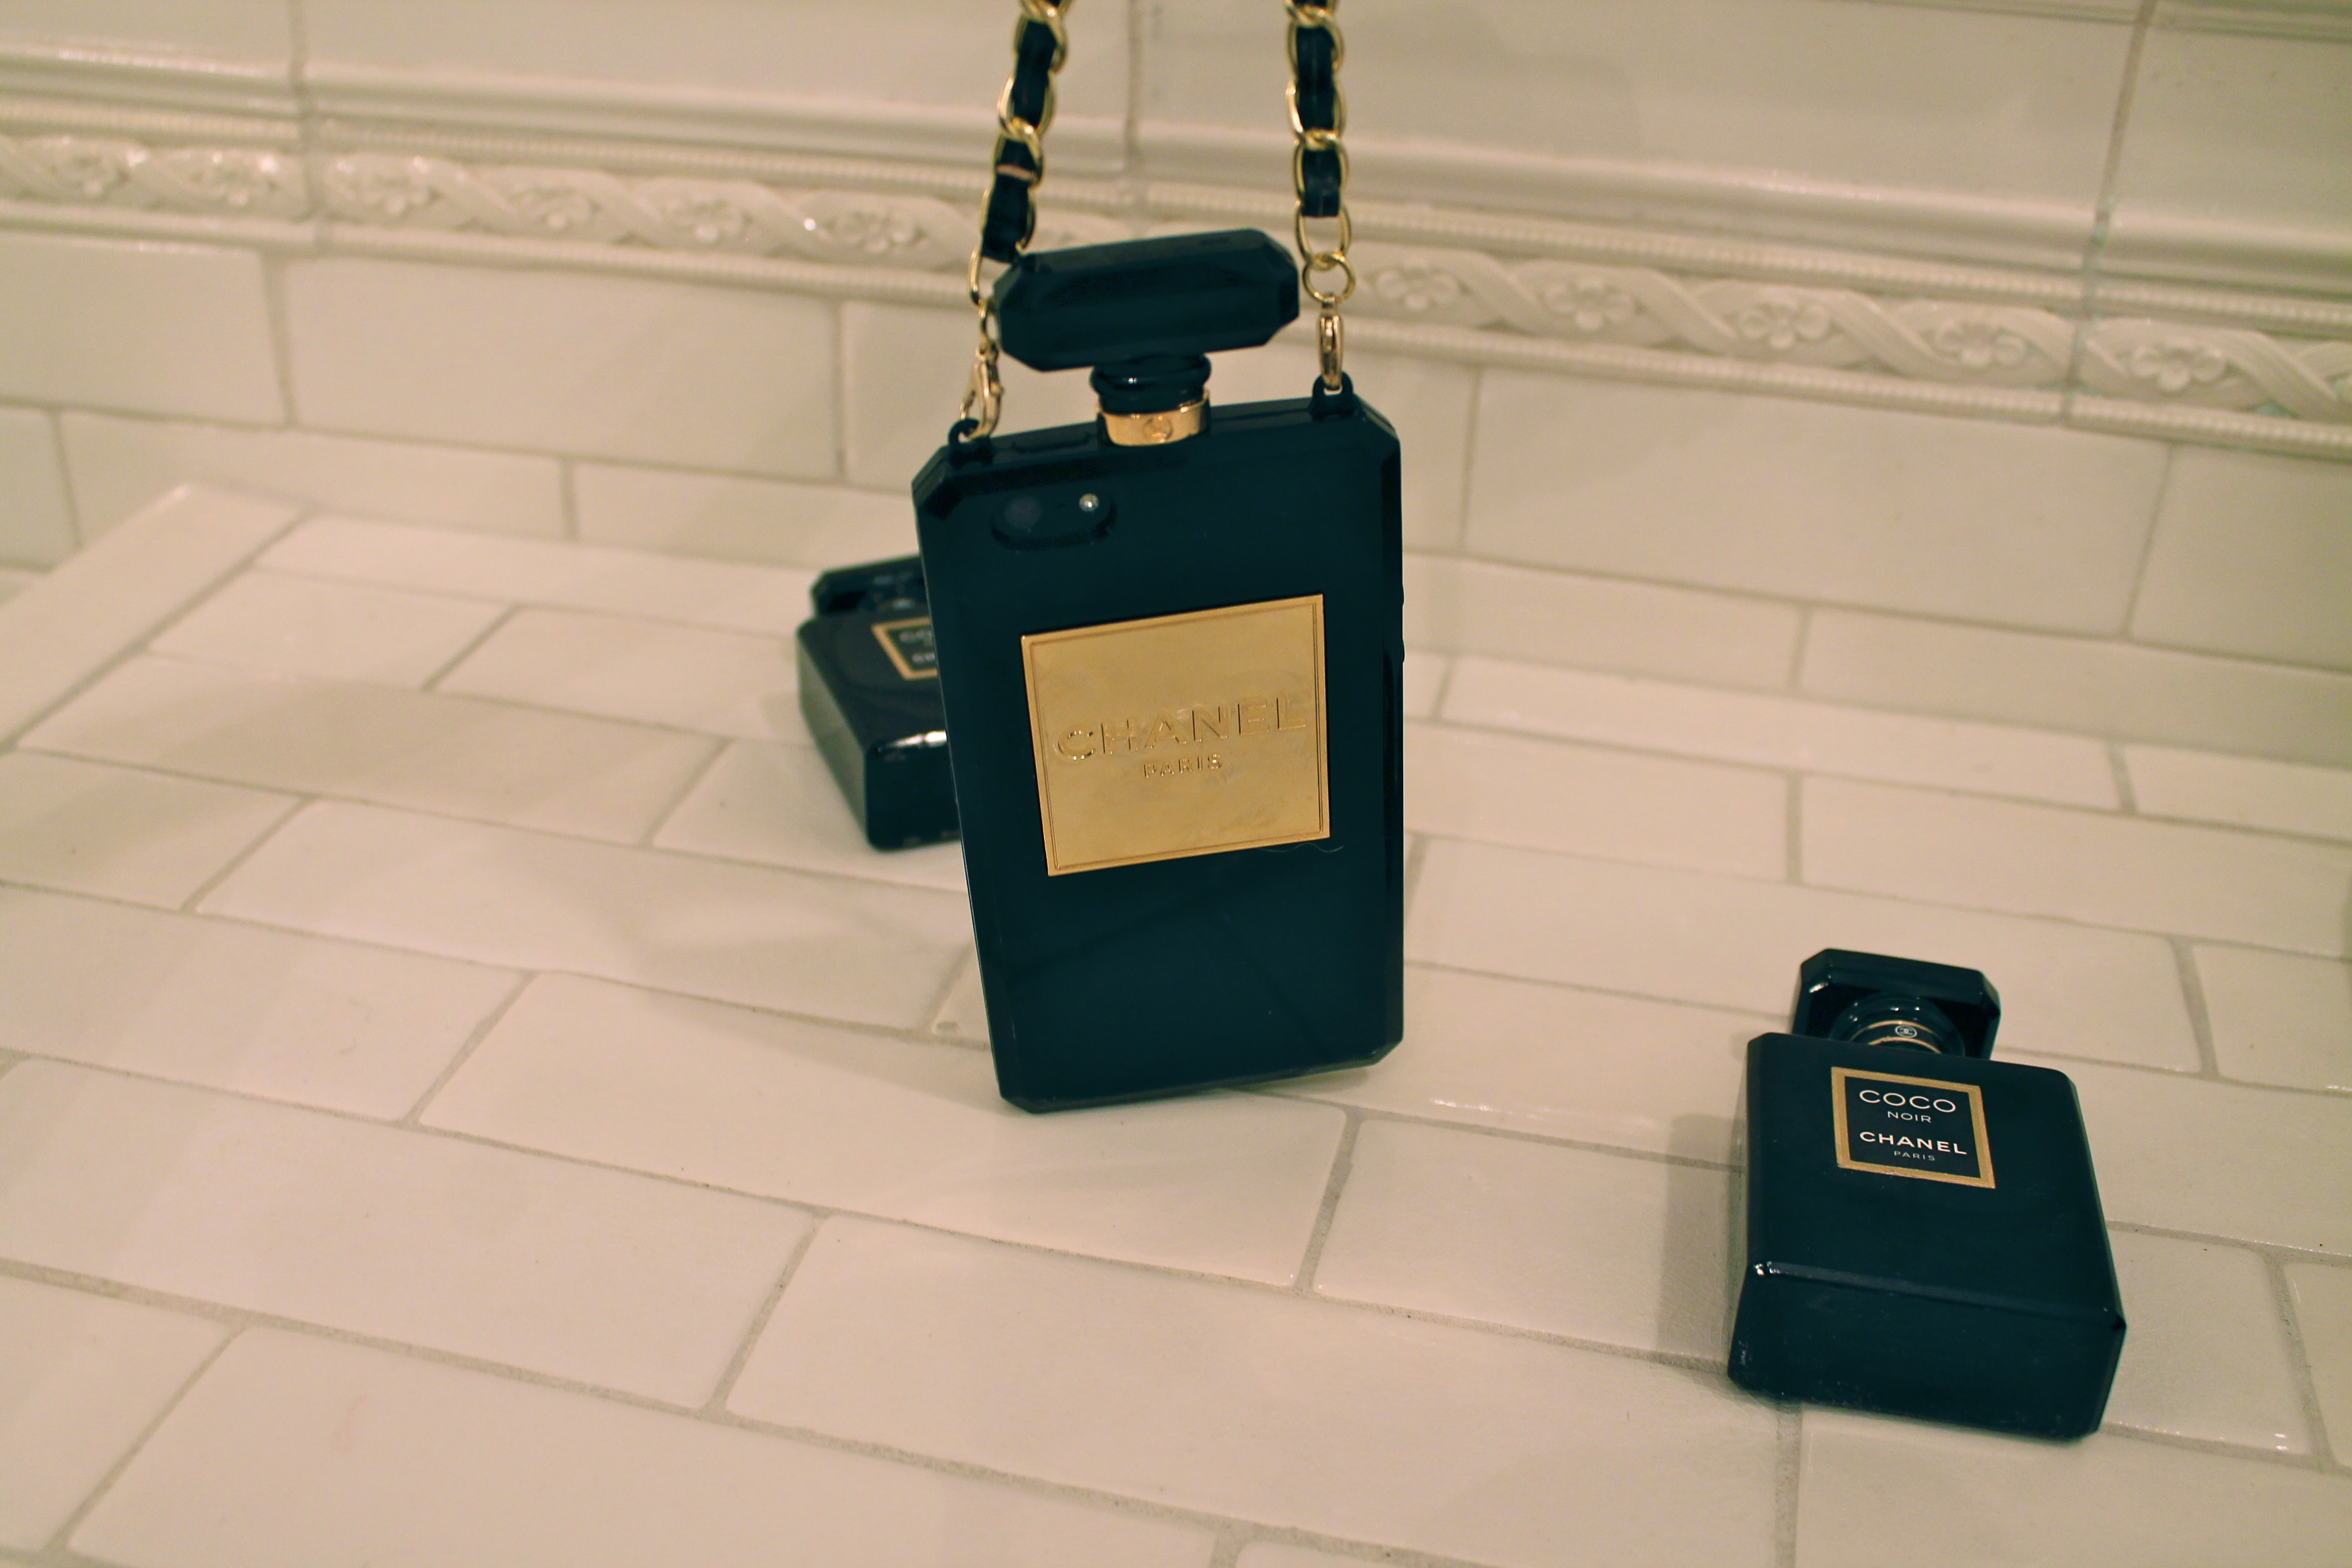 New In Chanel Perfume Bag Iphone Case Liz